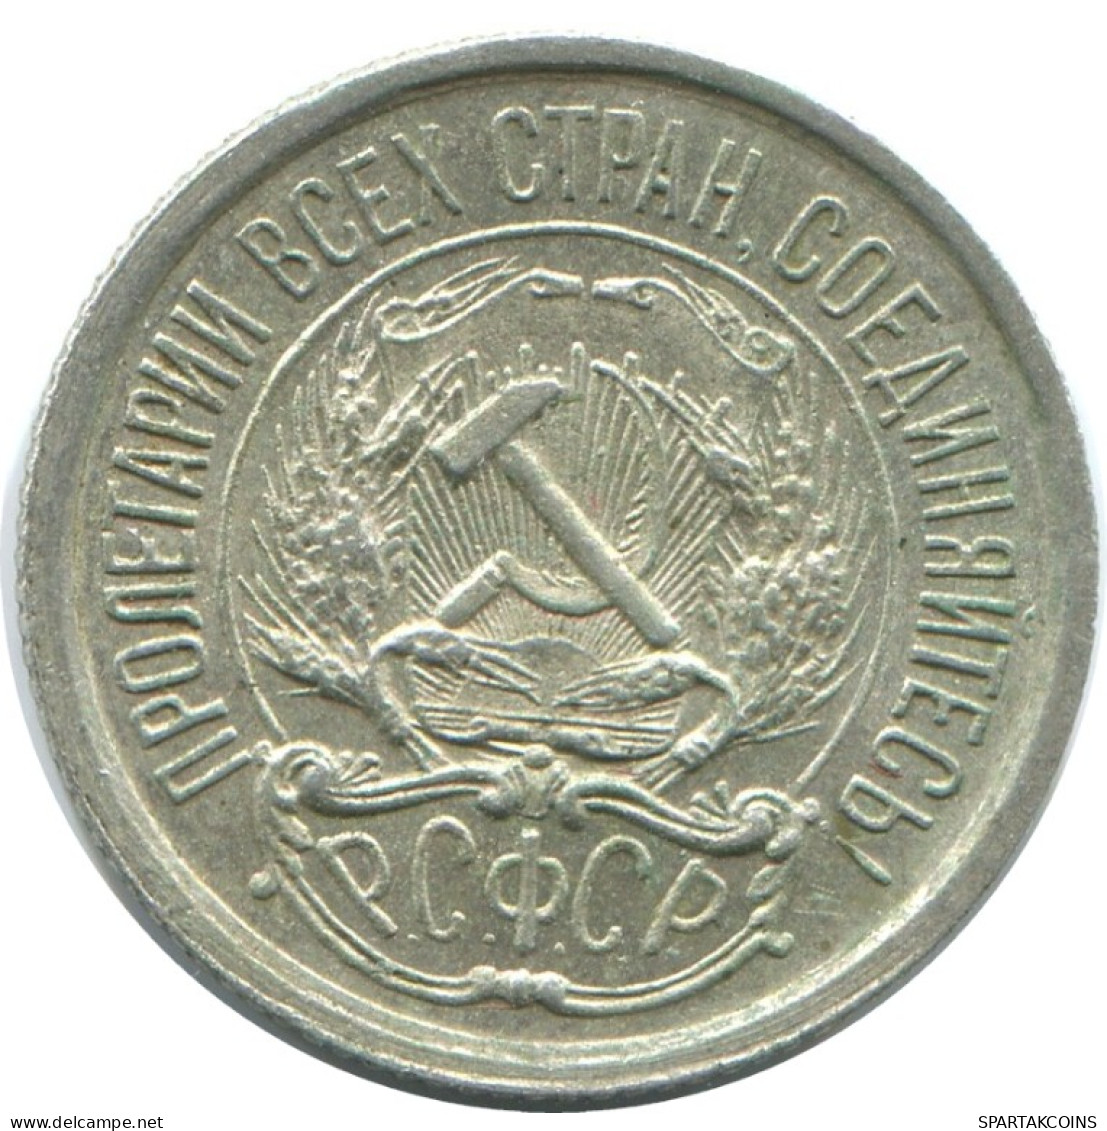 10 KOPEKS 1923 RUSIA RUSSIA RSFSR PLATA Moneda HIGH GRADE #AE911.4.E.A - Russland